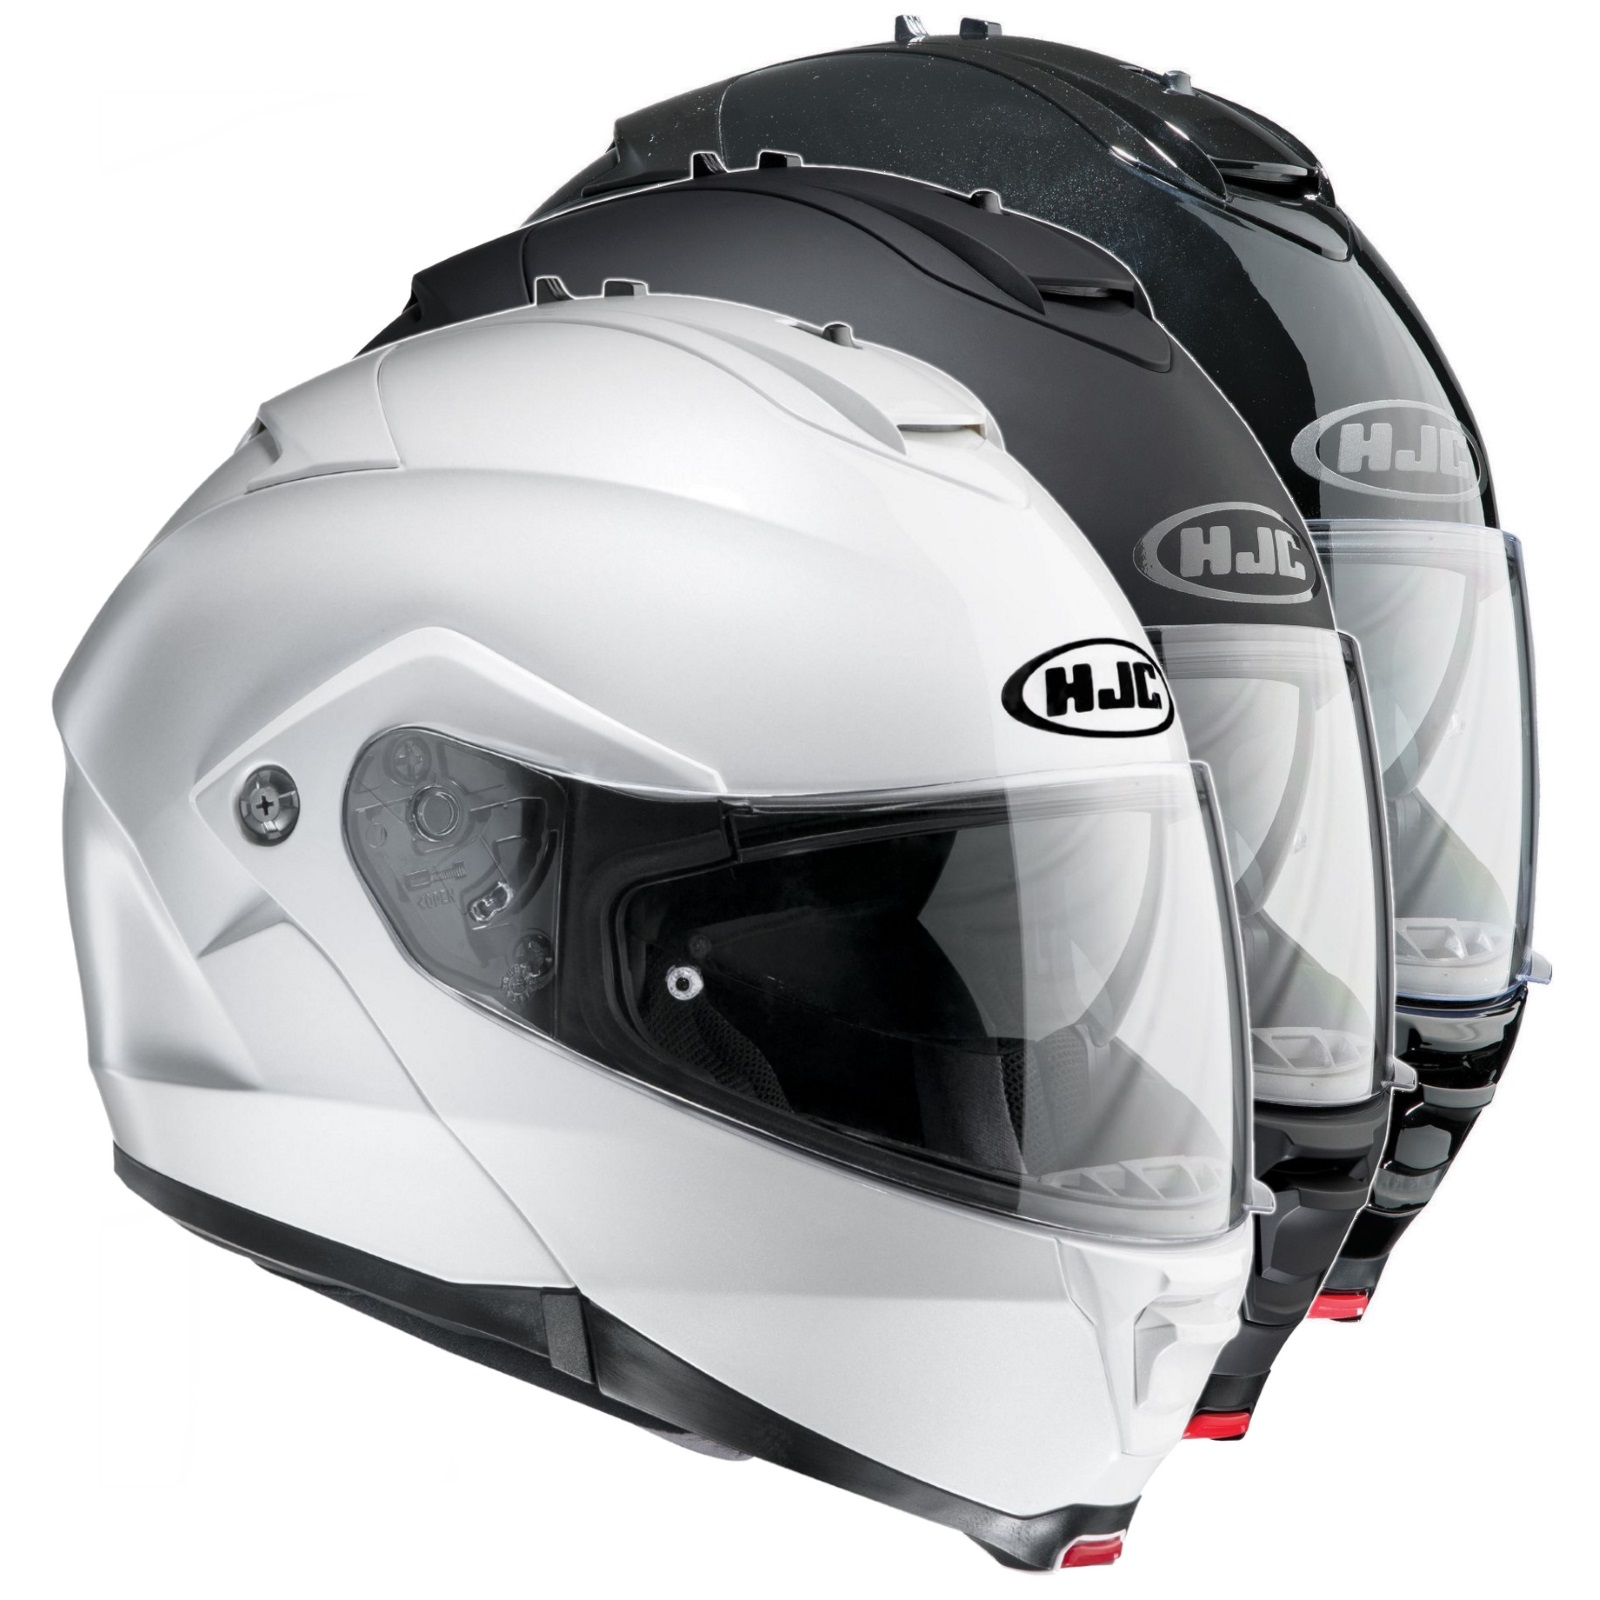 Tuzo Highway Open Face Motorcycle Crash Helmet Metallic Silver Small 56cm 